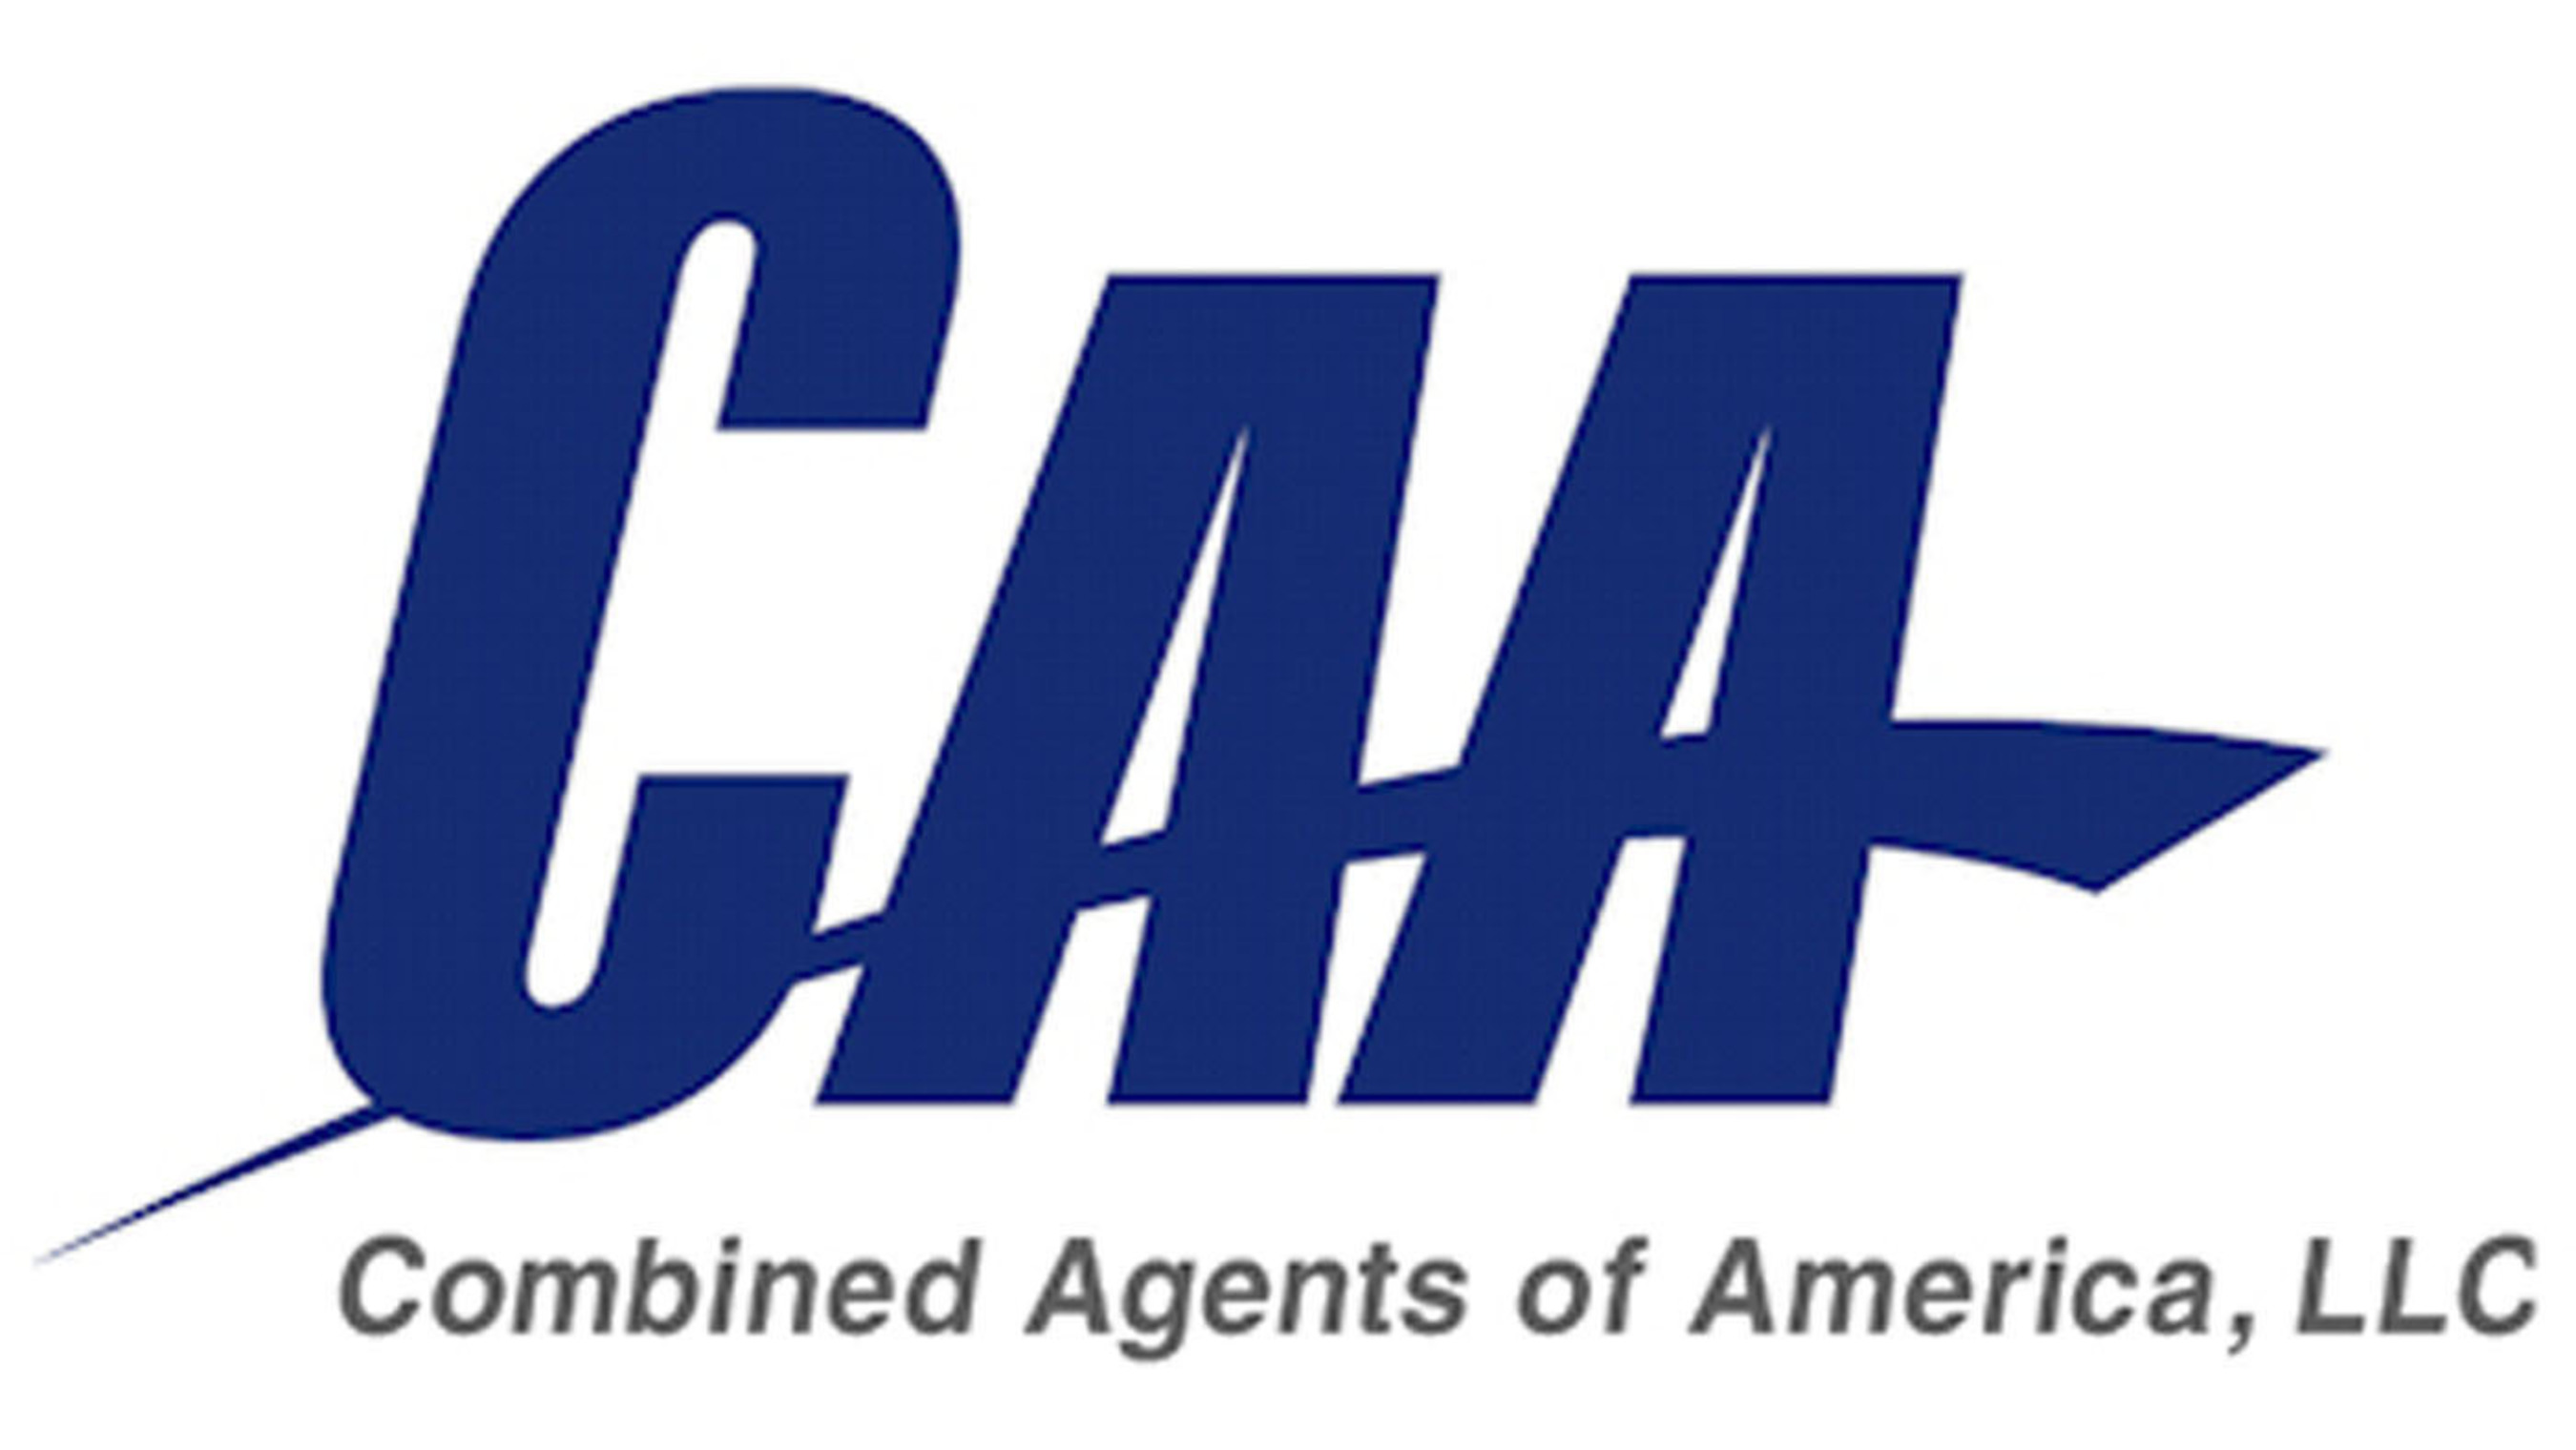 Combined Agents of America, LLC Logo